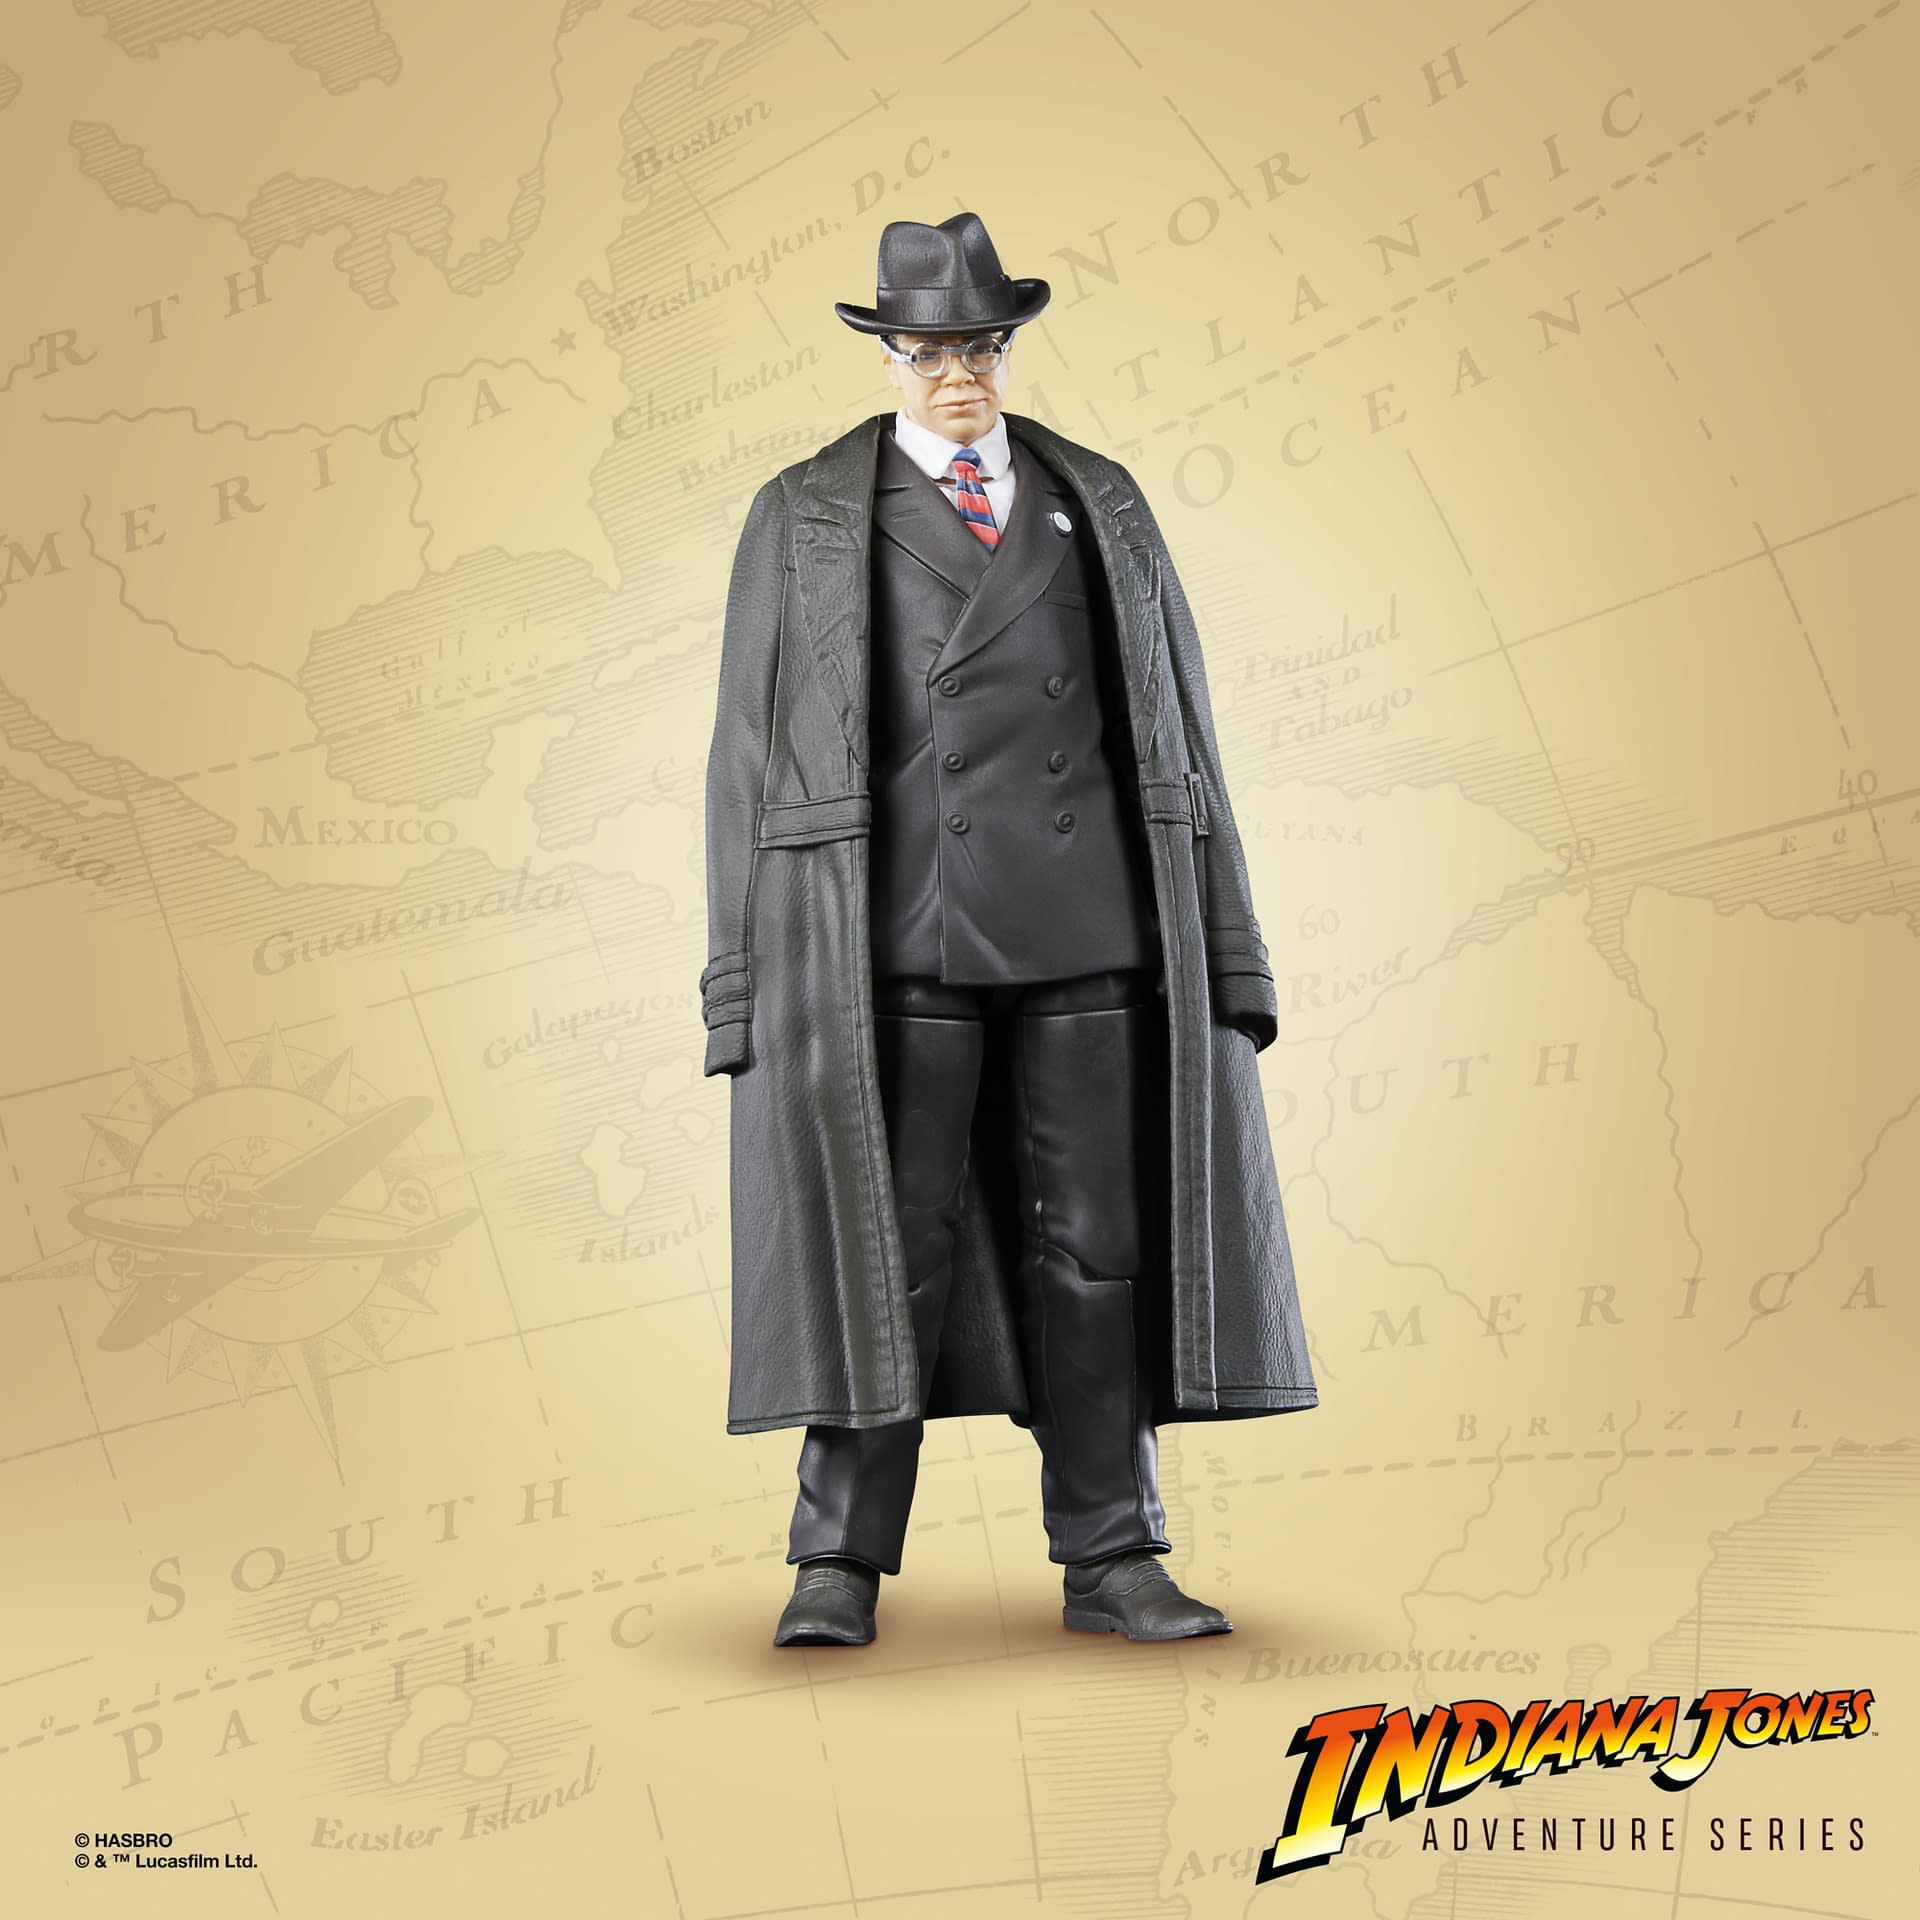 Pre-Orders Arrive for Indiana Jones Adventure Series Major Arnold Toht